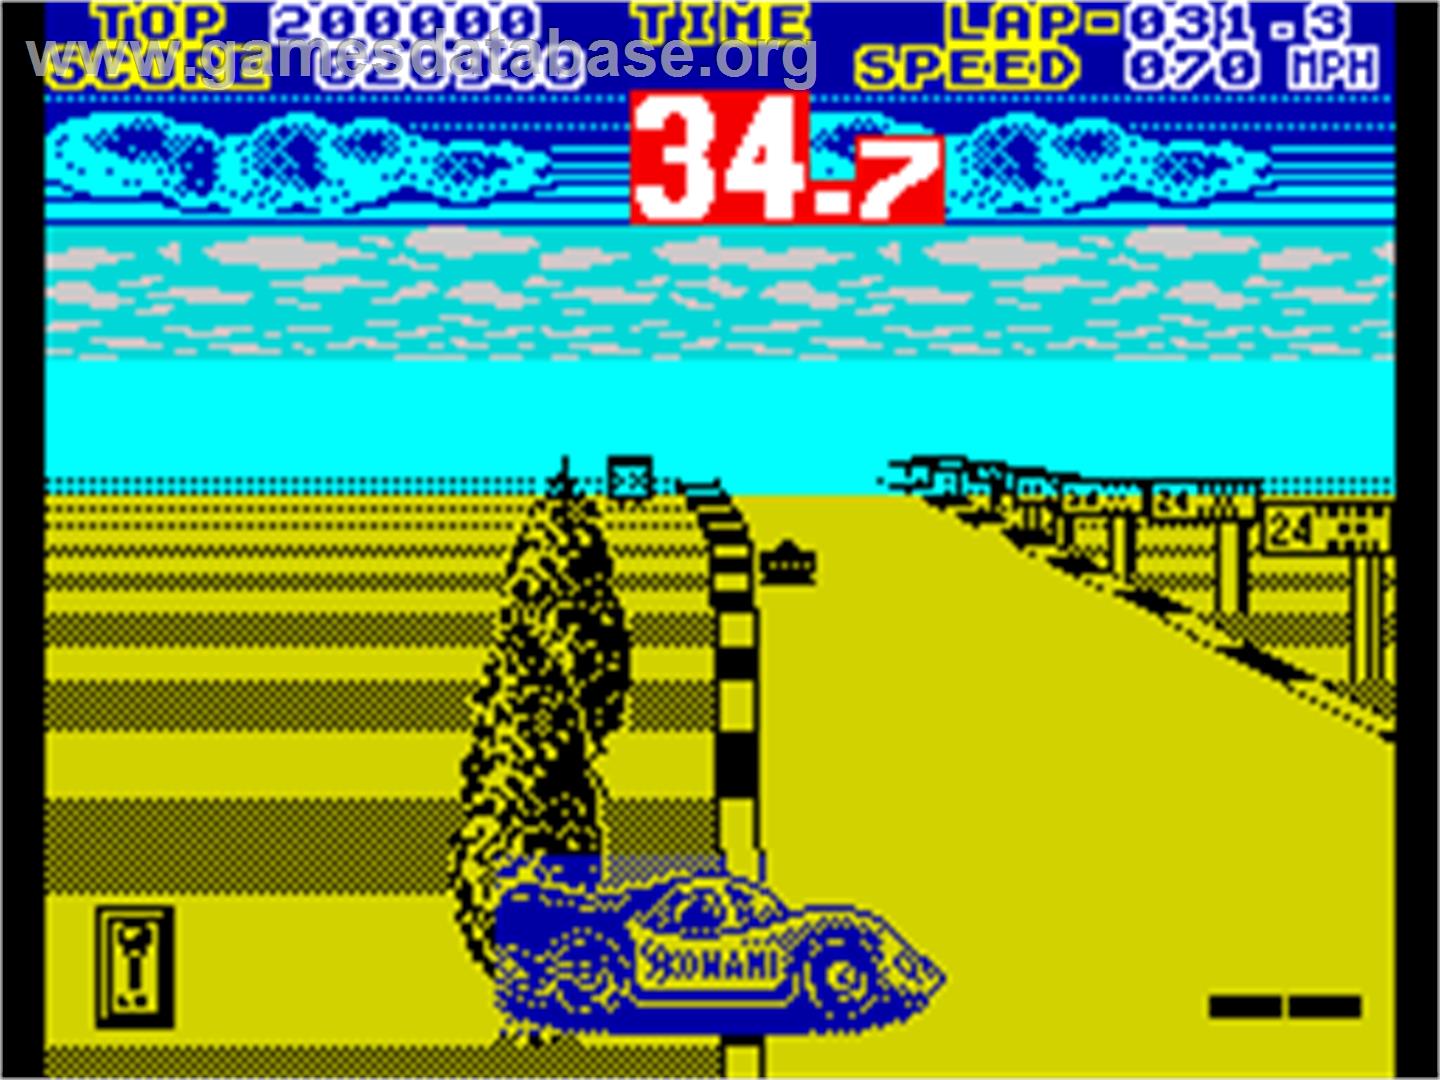 WEC Le Mans - Sinclair ZX Spectrum - Artwork - In Game